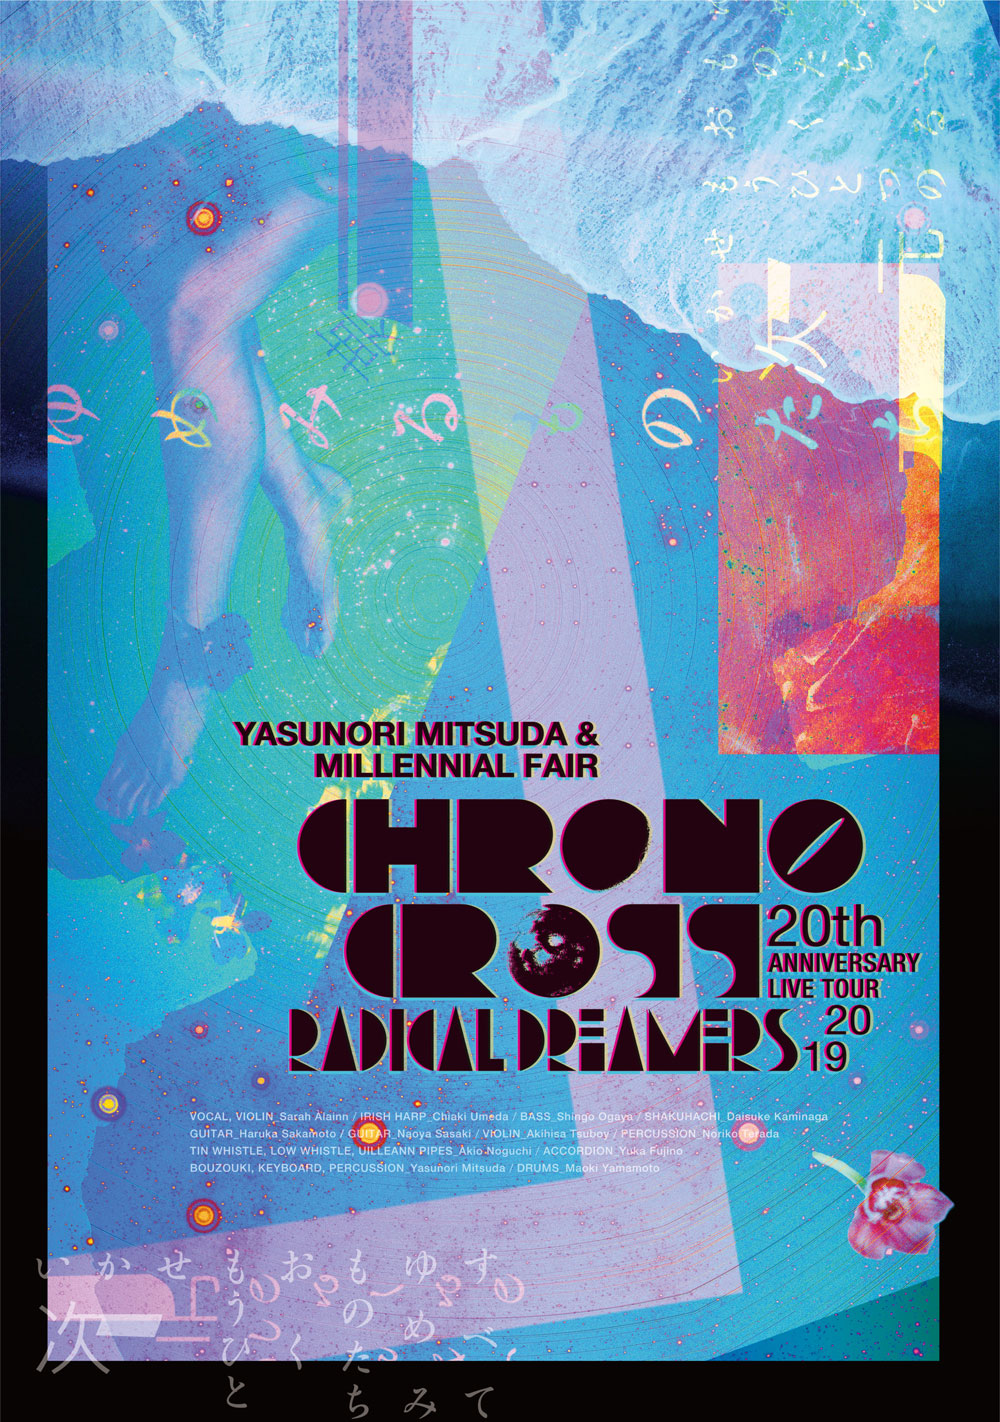 CHRONO CROSS 20th Anniversary Live Tour 2019 RADICAL DREAMERS Yasunori Mitsuda & Millennial Fair OFFICIAL PAMPHLET